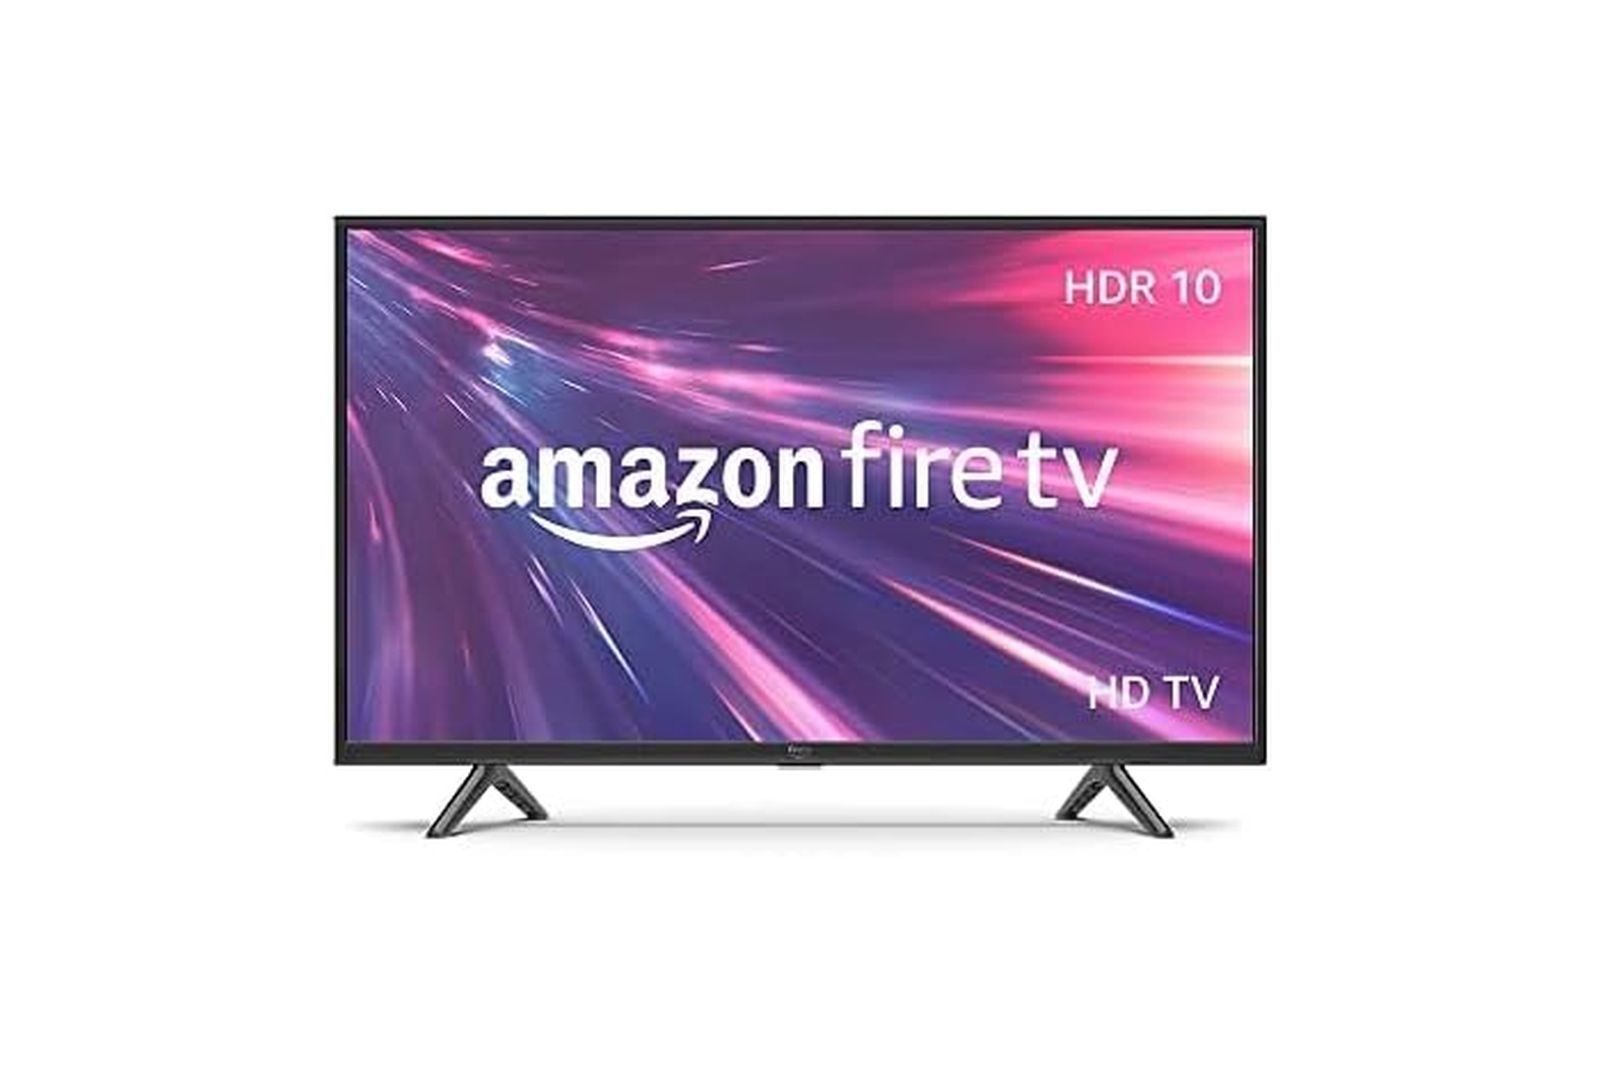 Amazon Fire TV 2 Series